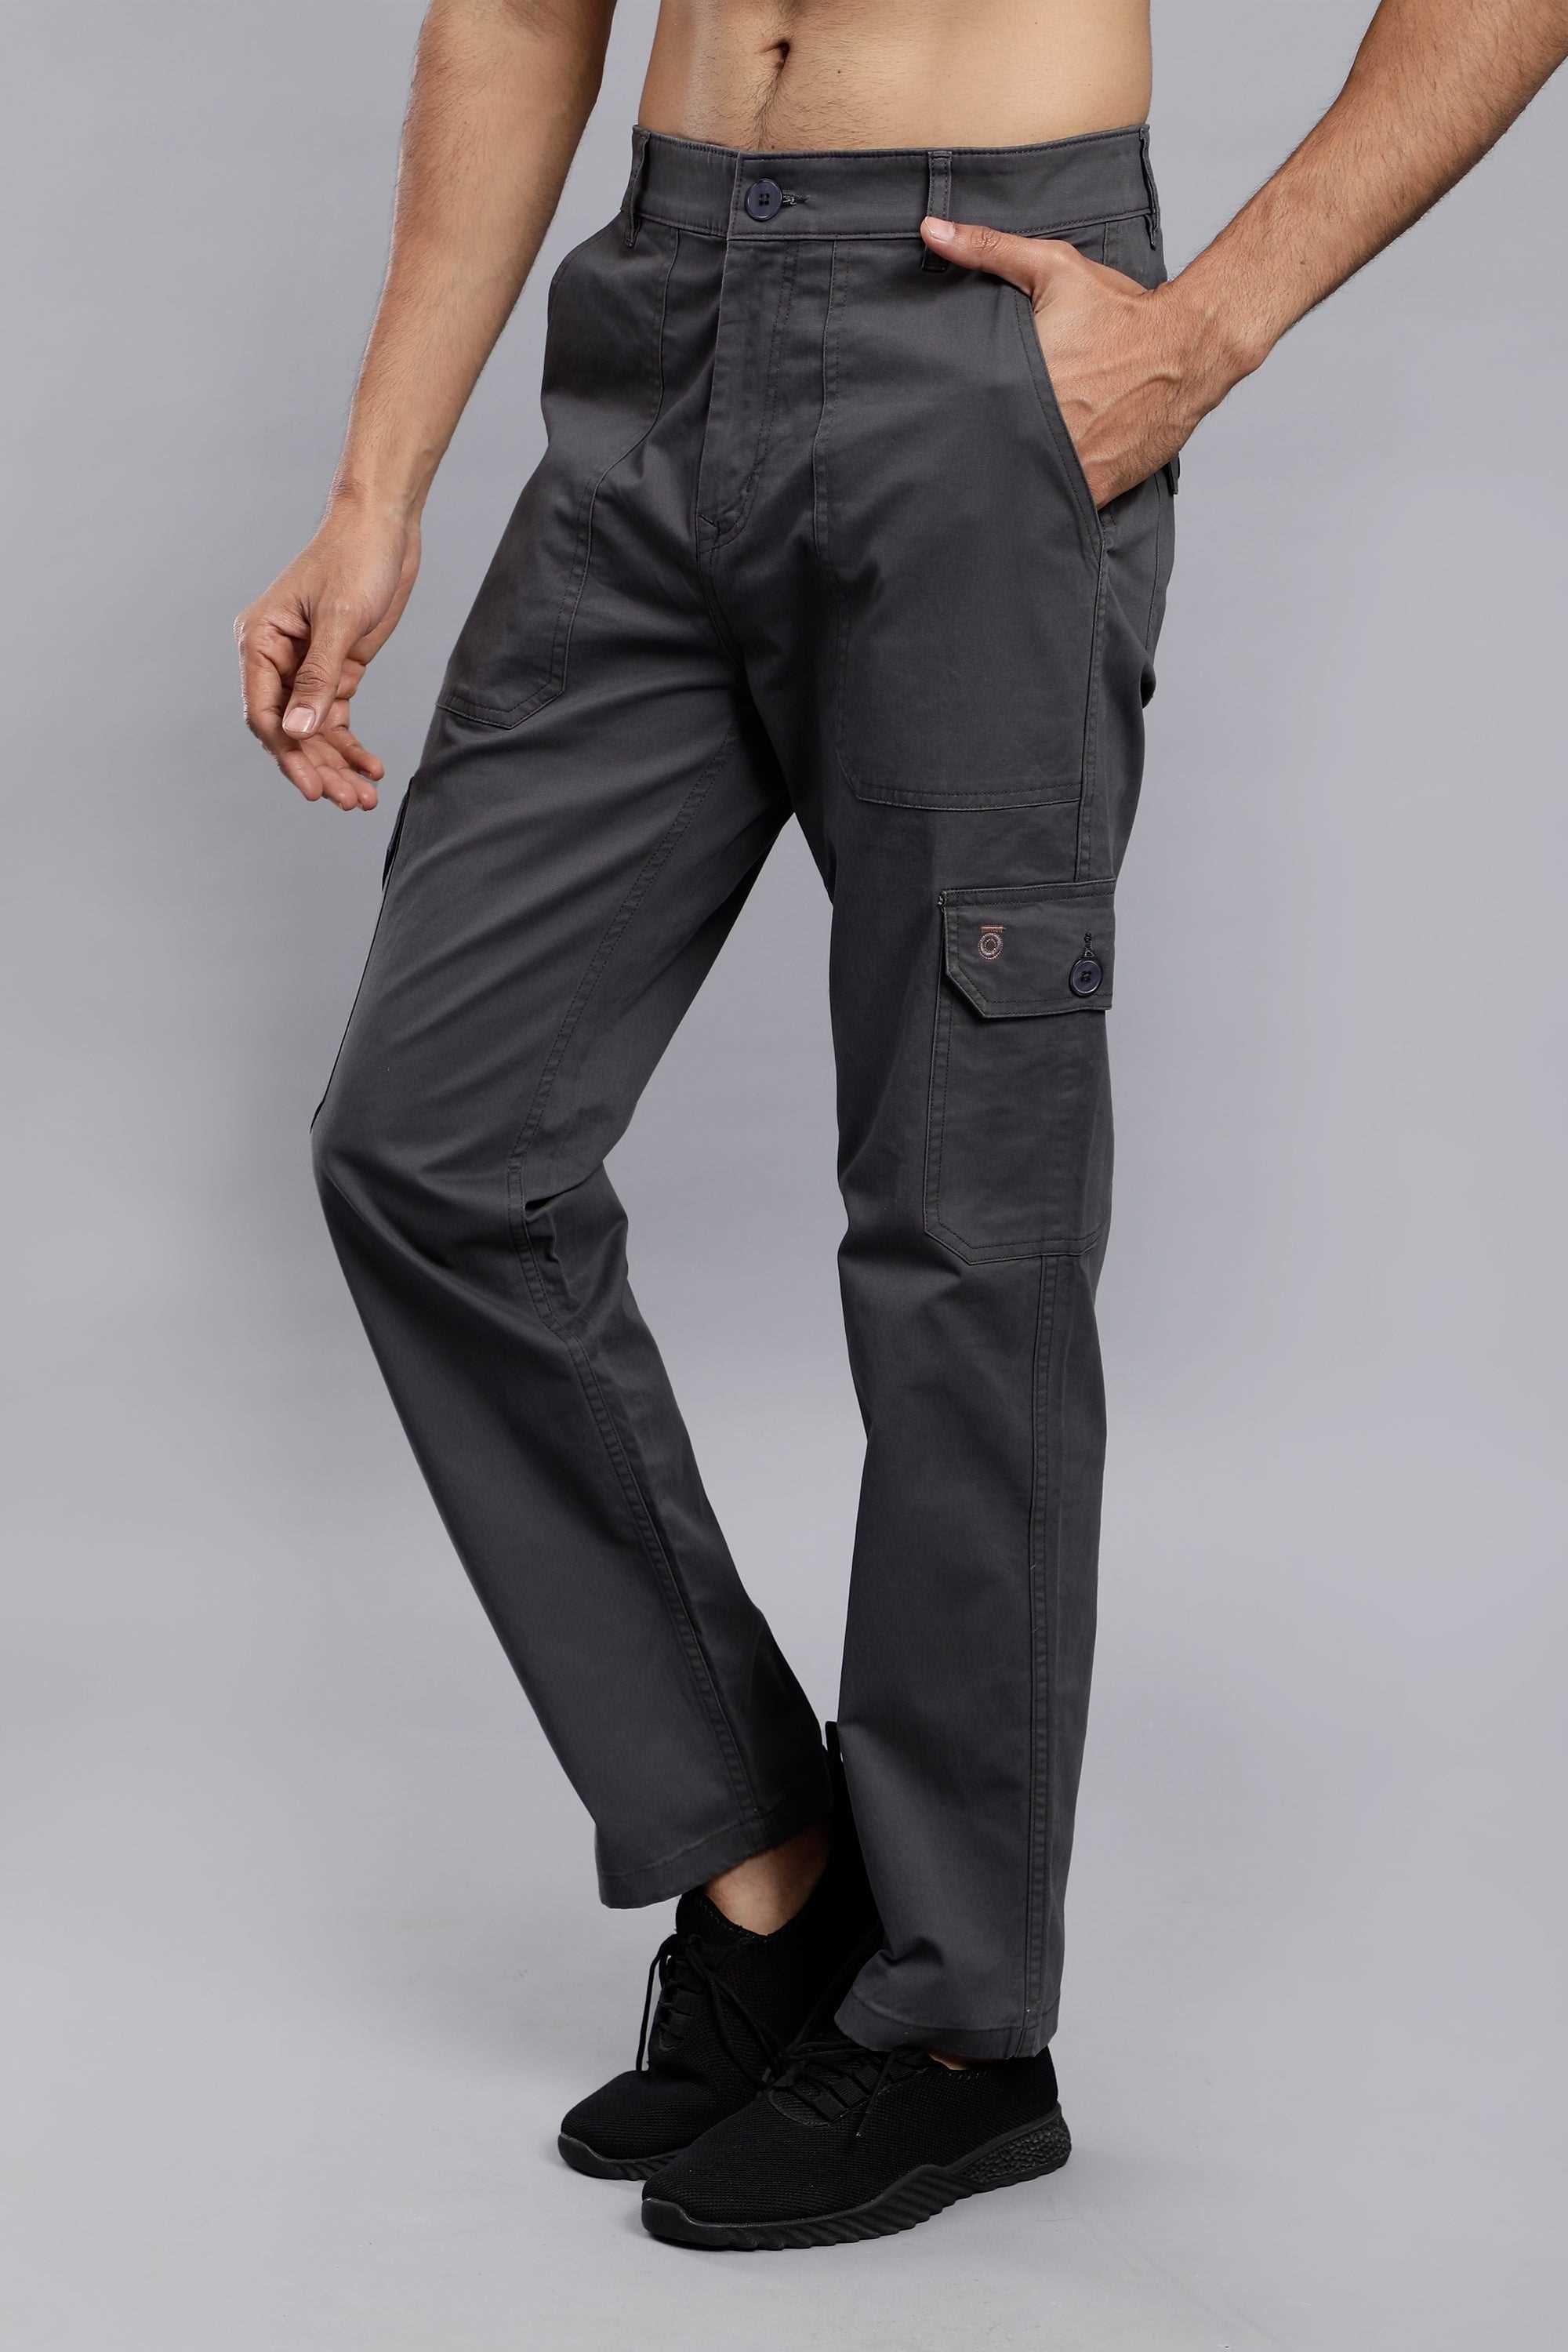 Buy Lezendary Apparels Men's Slim Fit Cargo Pant ( LJNC _ Light Grey _ 36 )  at Amazon.in